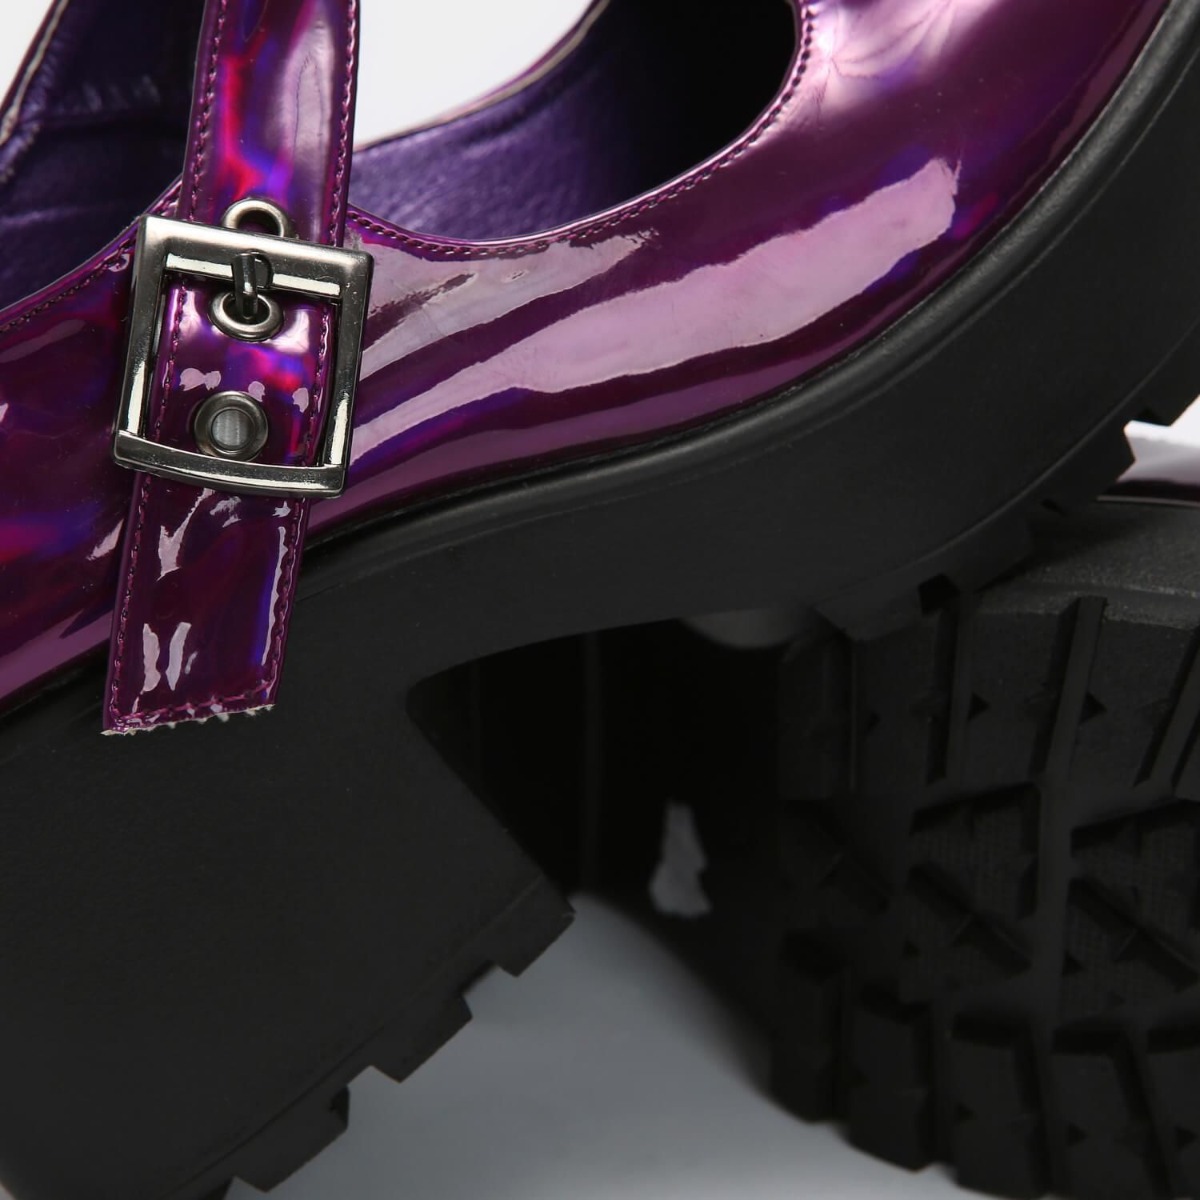 kfnd35purbbb_chaussures-mary-janes-lolita-glam-rock-sai-violet-metallique